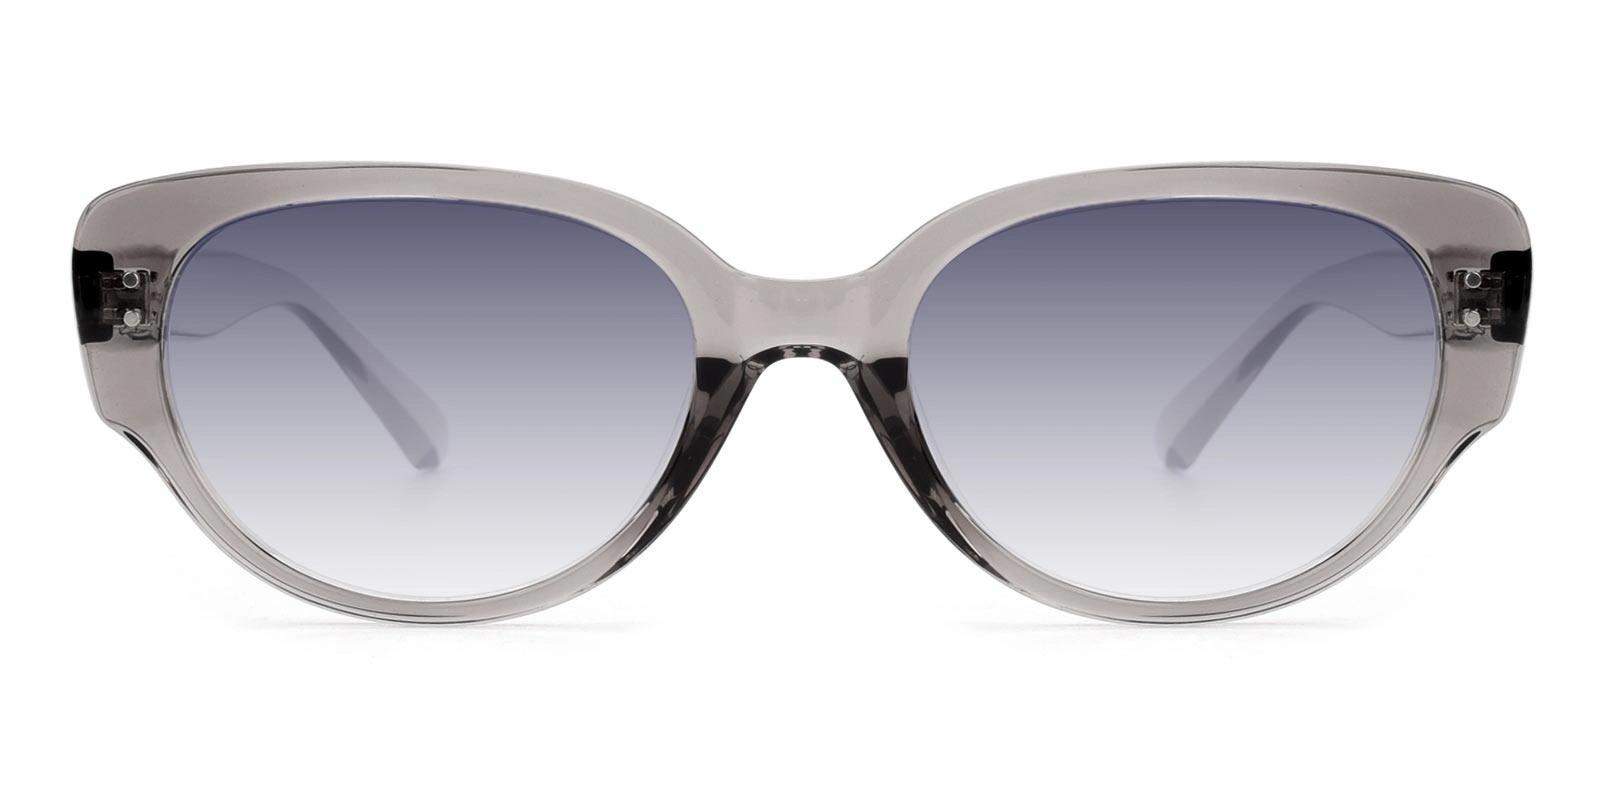 Steptic Gray Acetate Sunglasses , UniversalBridgeFit Frames from ABBE Glasses